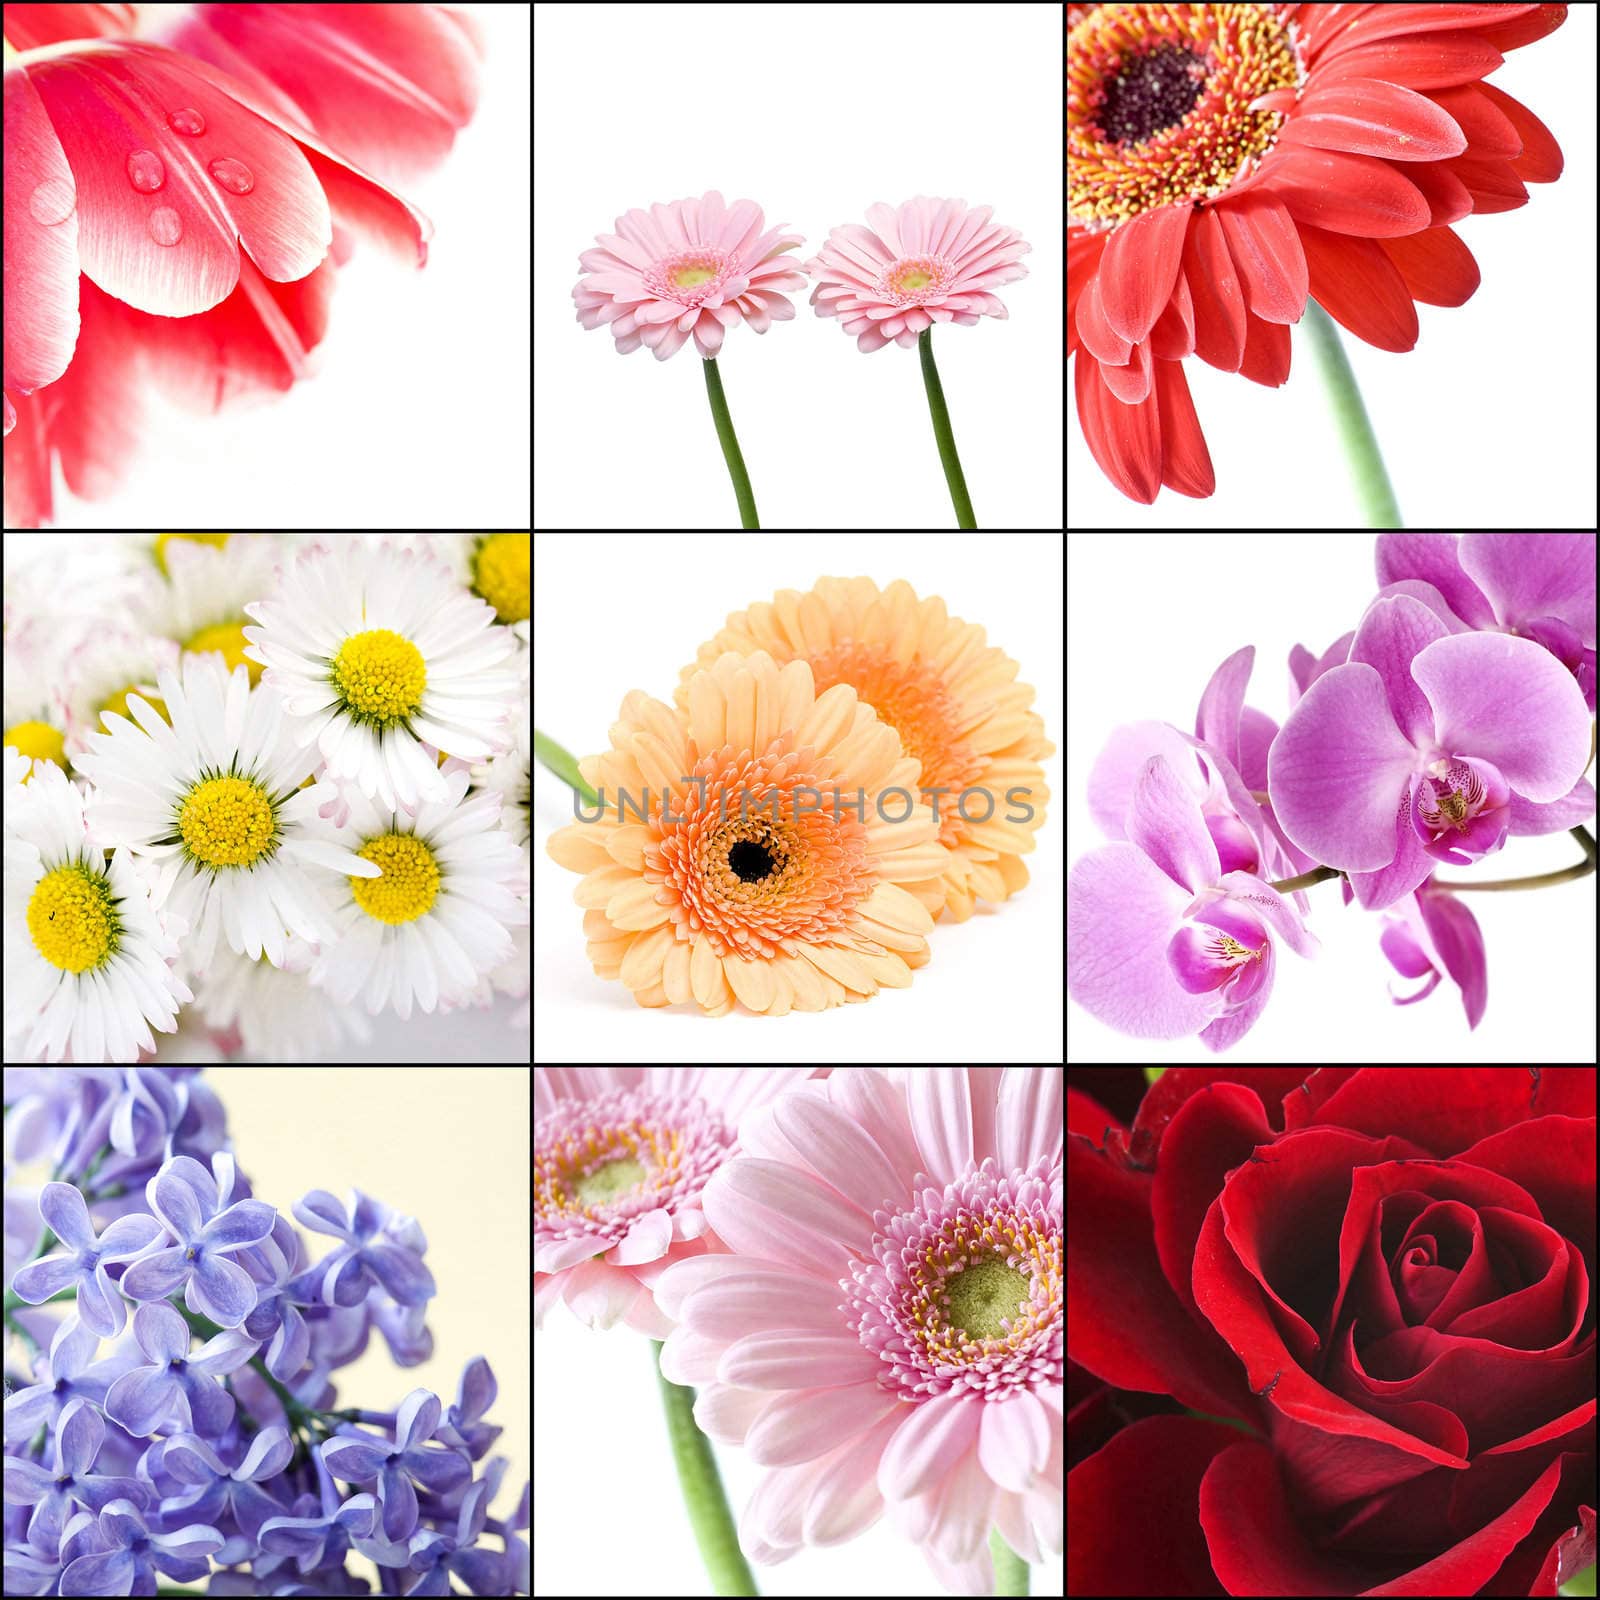 beautiful flowers collage by miradrozdowski